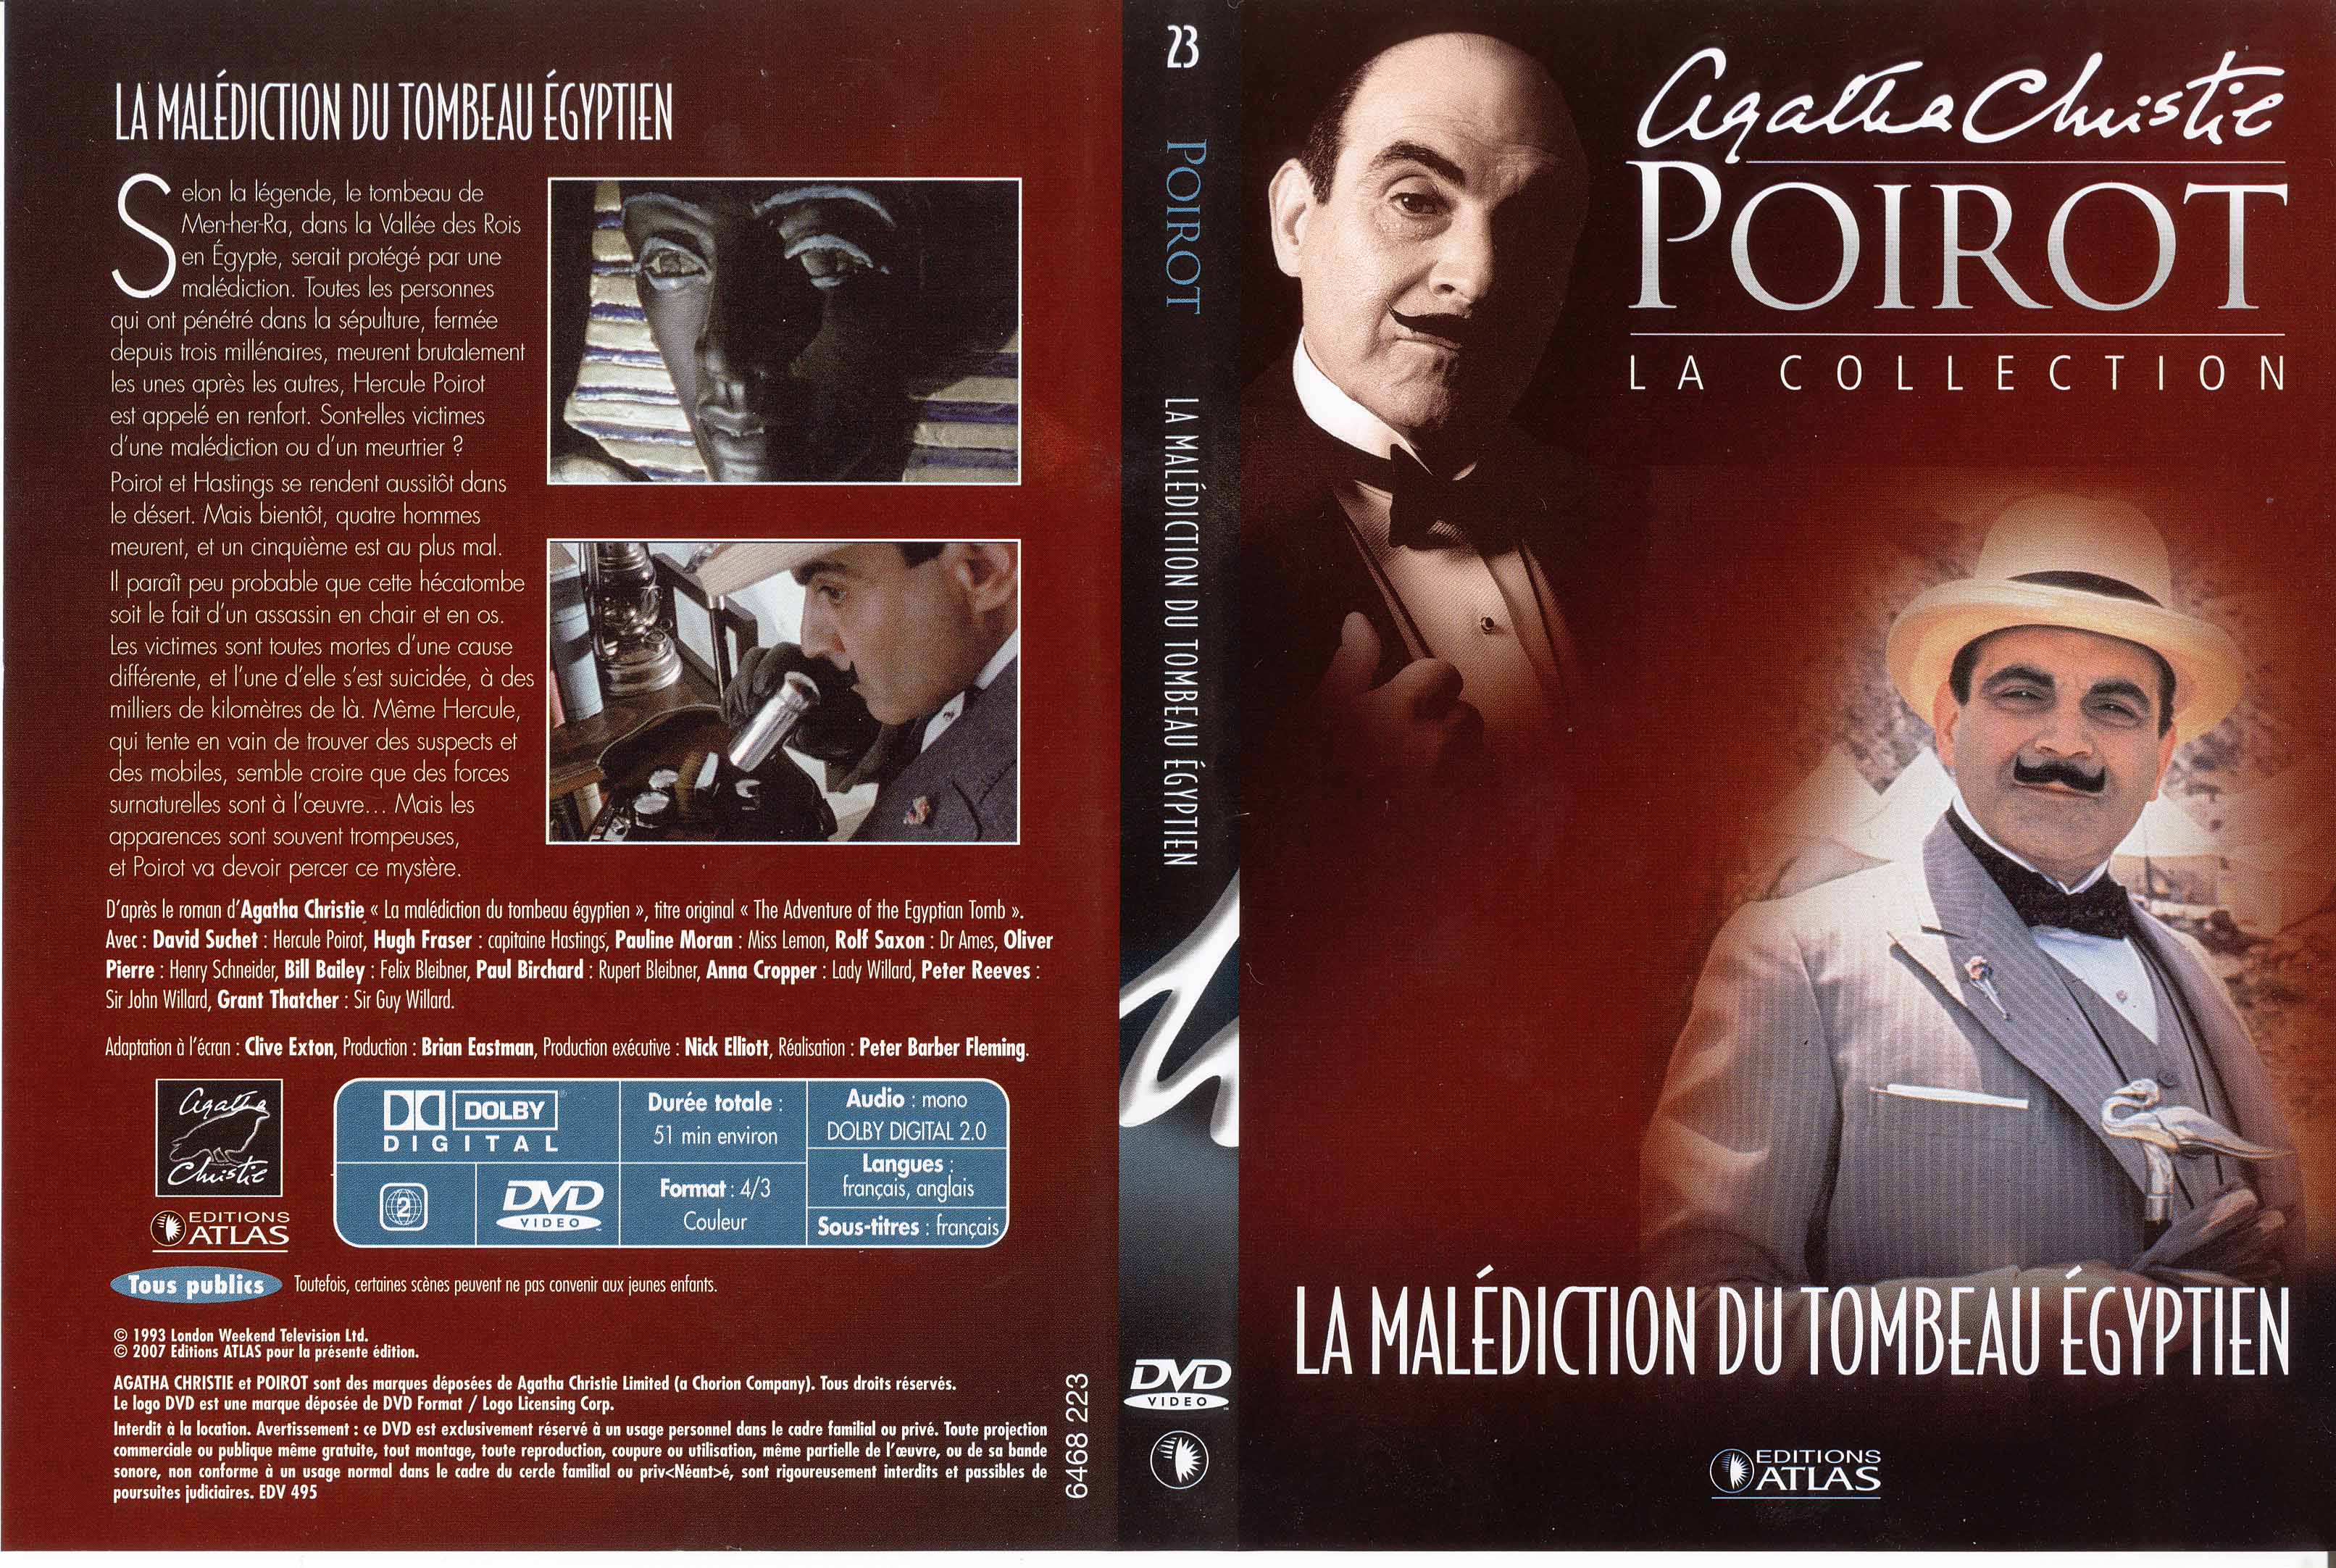 Jaquette DVD Hercule Poirot vol 23